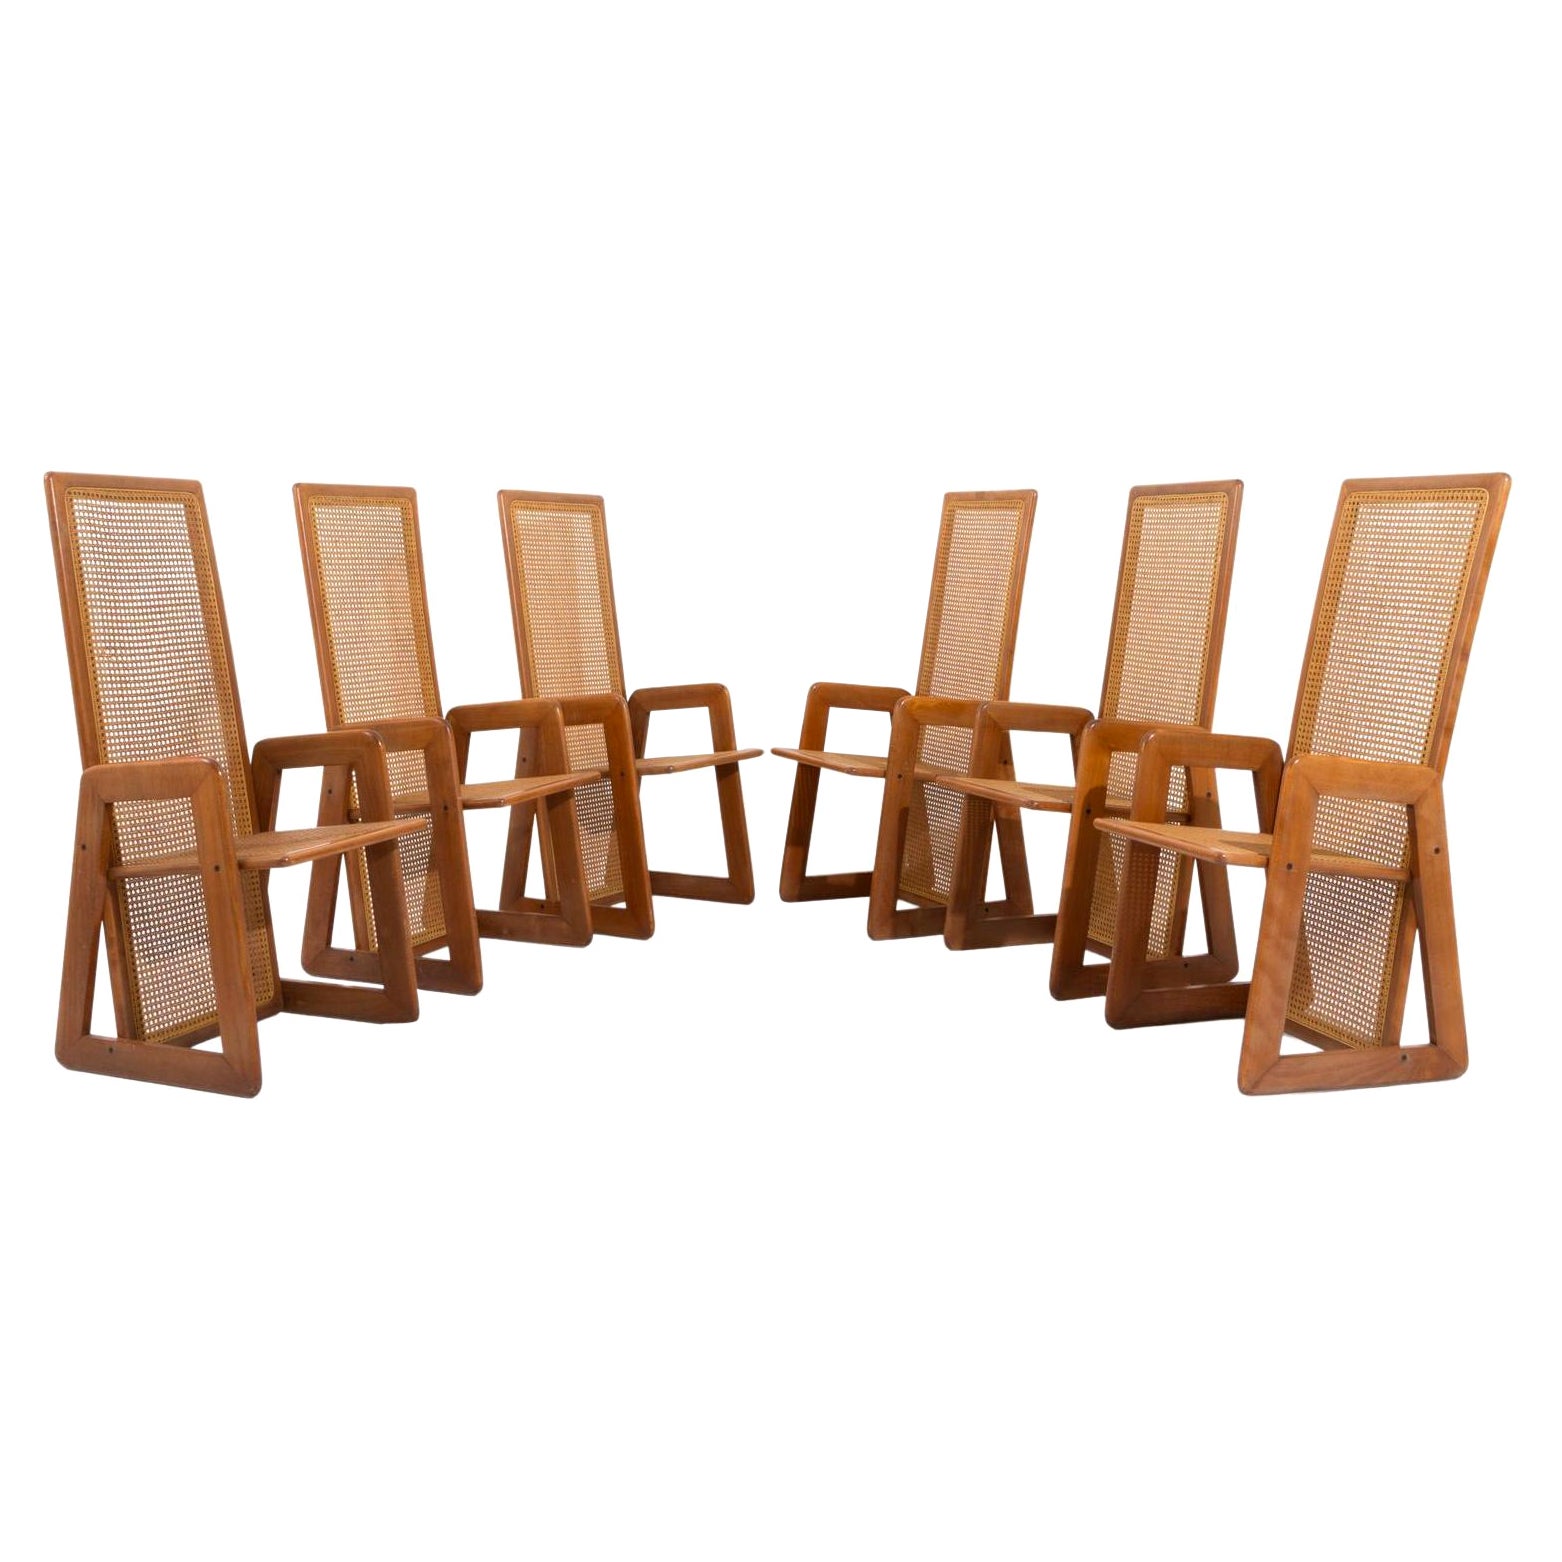 Fabio Lenci set of 6 chairs